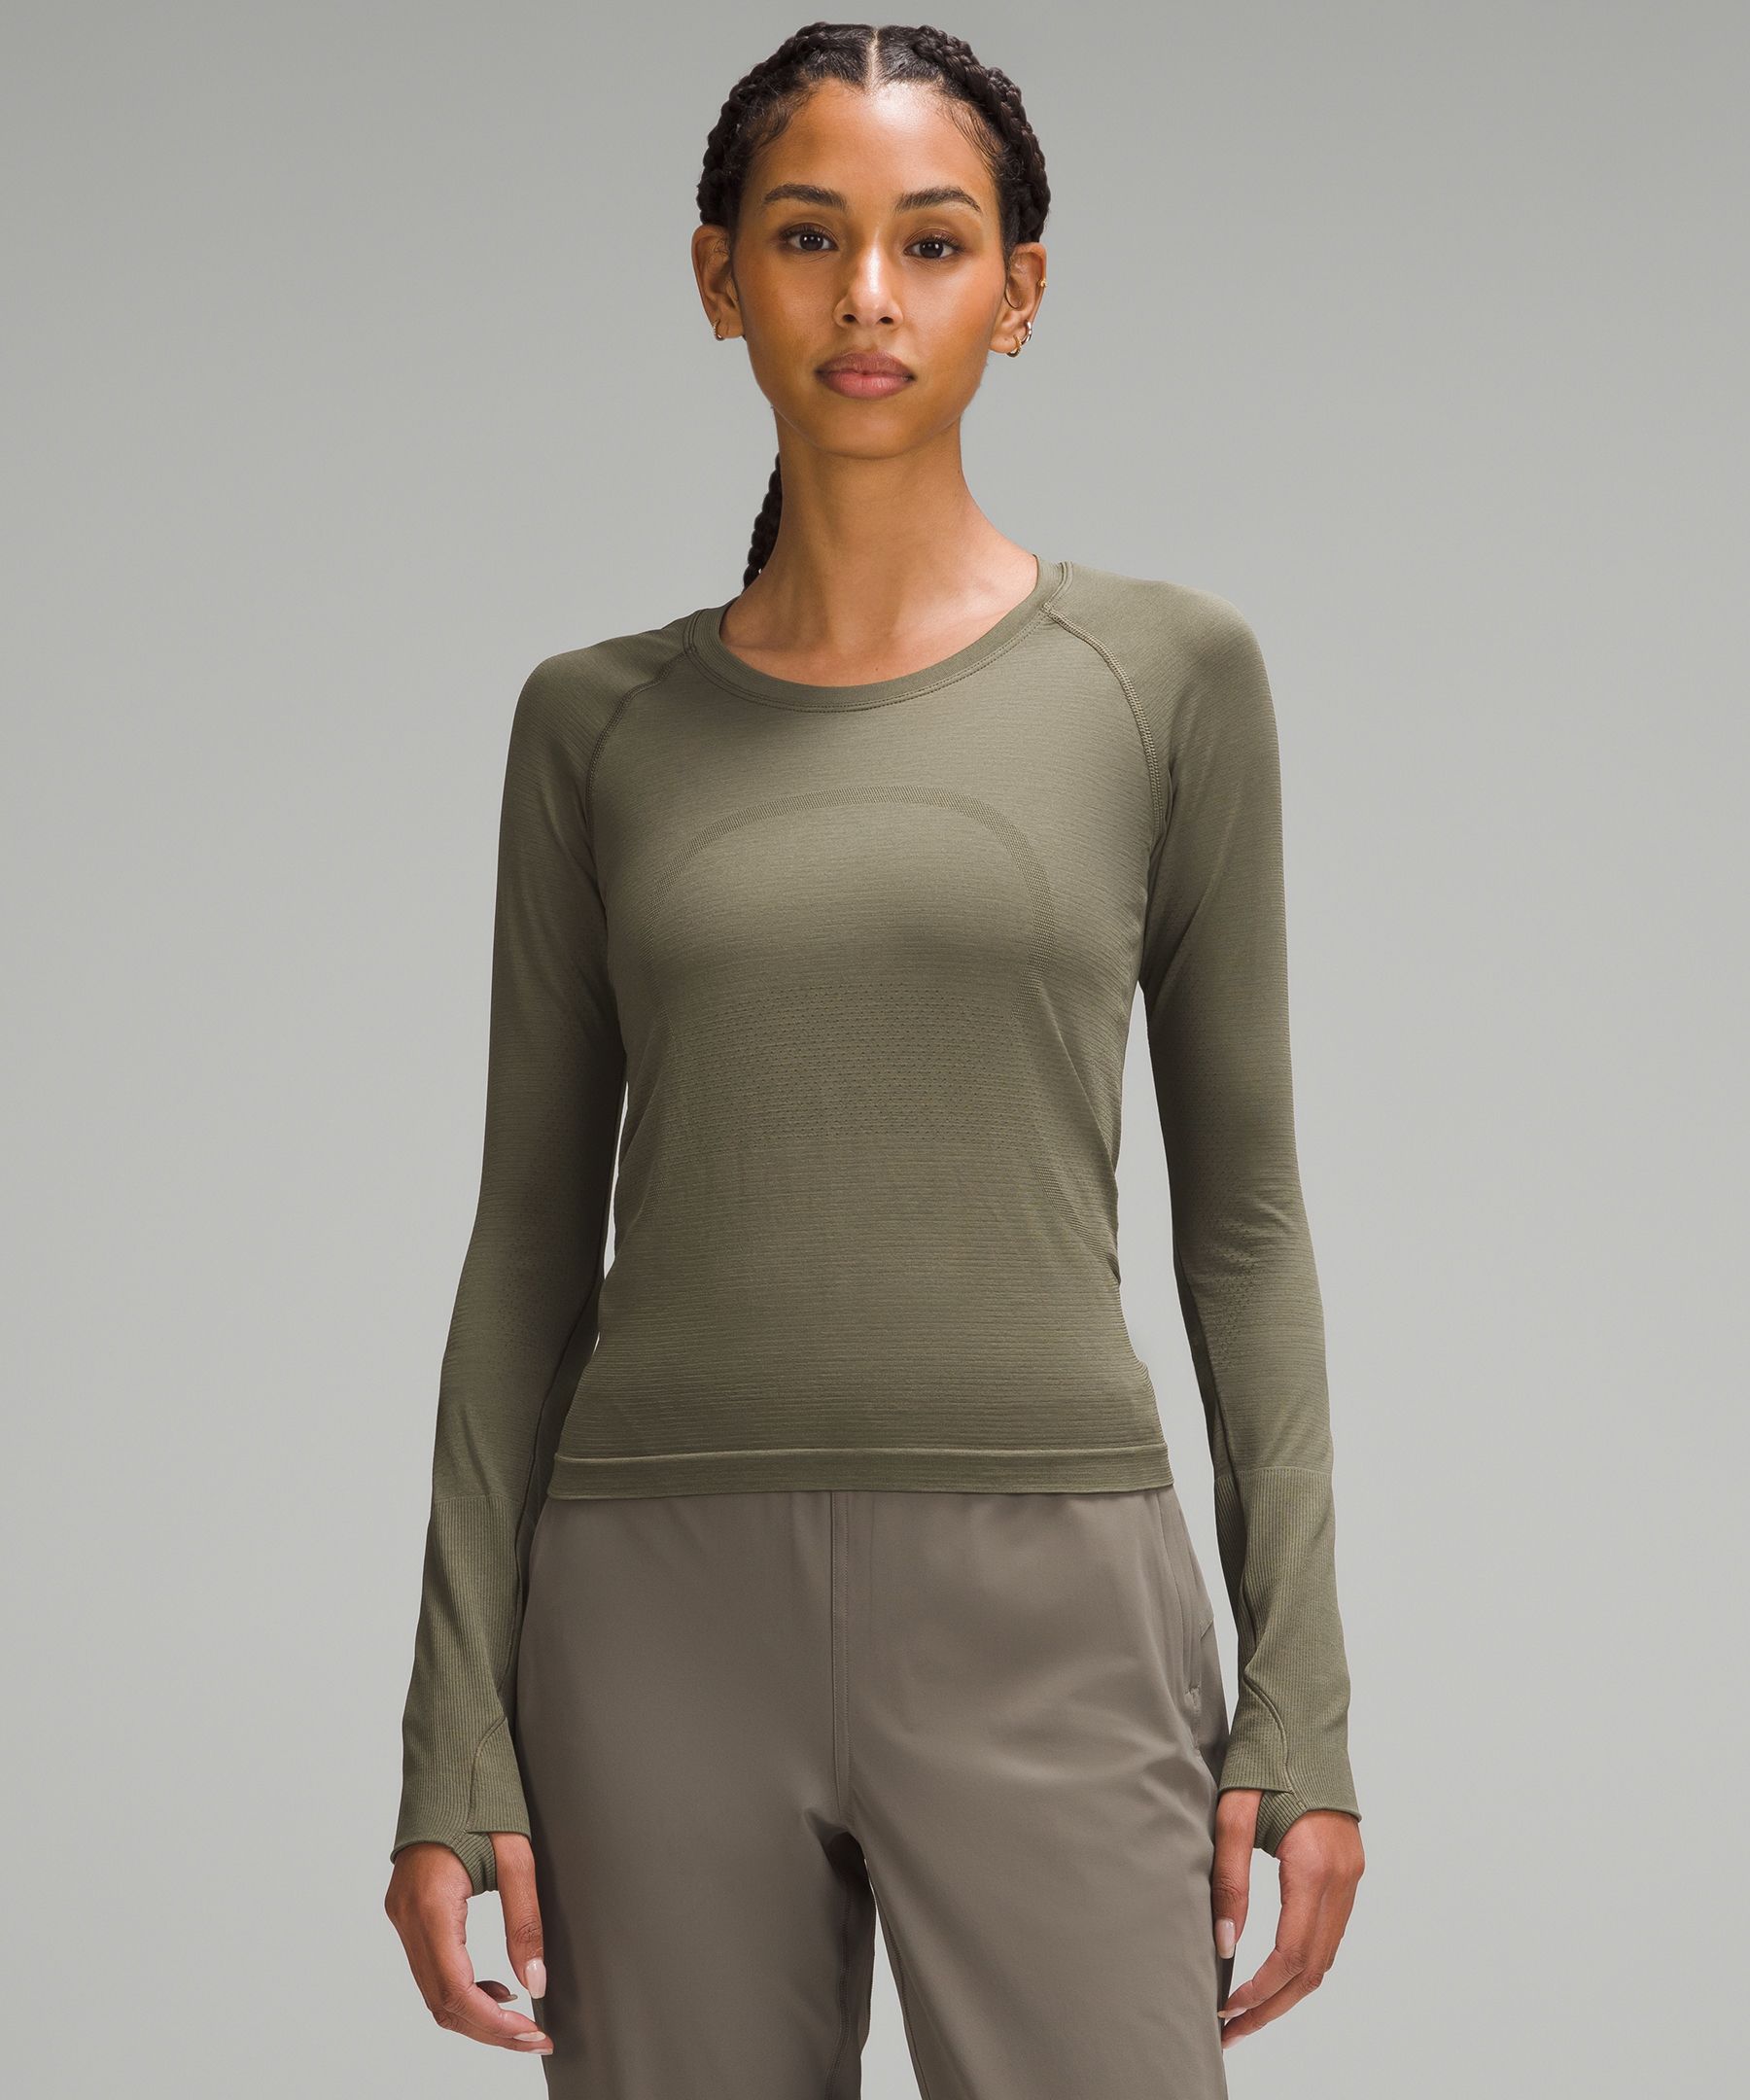 Lululemon athletica Swiftly Tech Long-Sleeve Shirt 2.0 *Race Length, Women's Long Sleeve Shirts